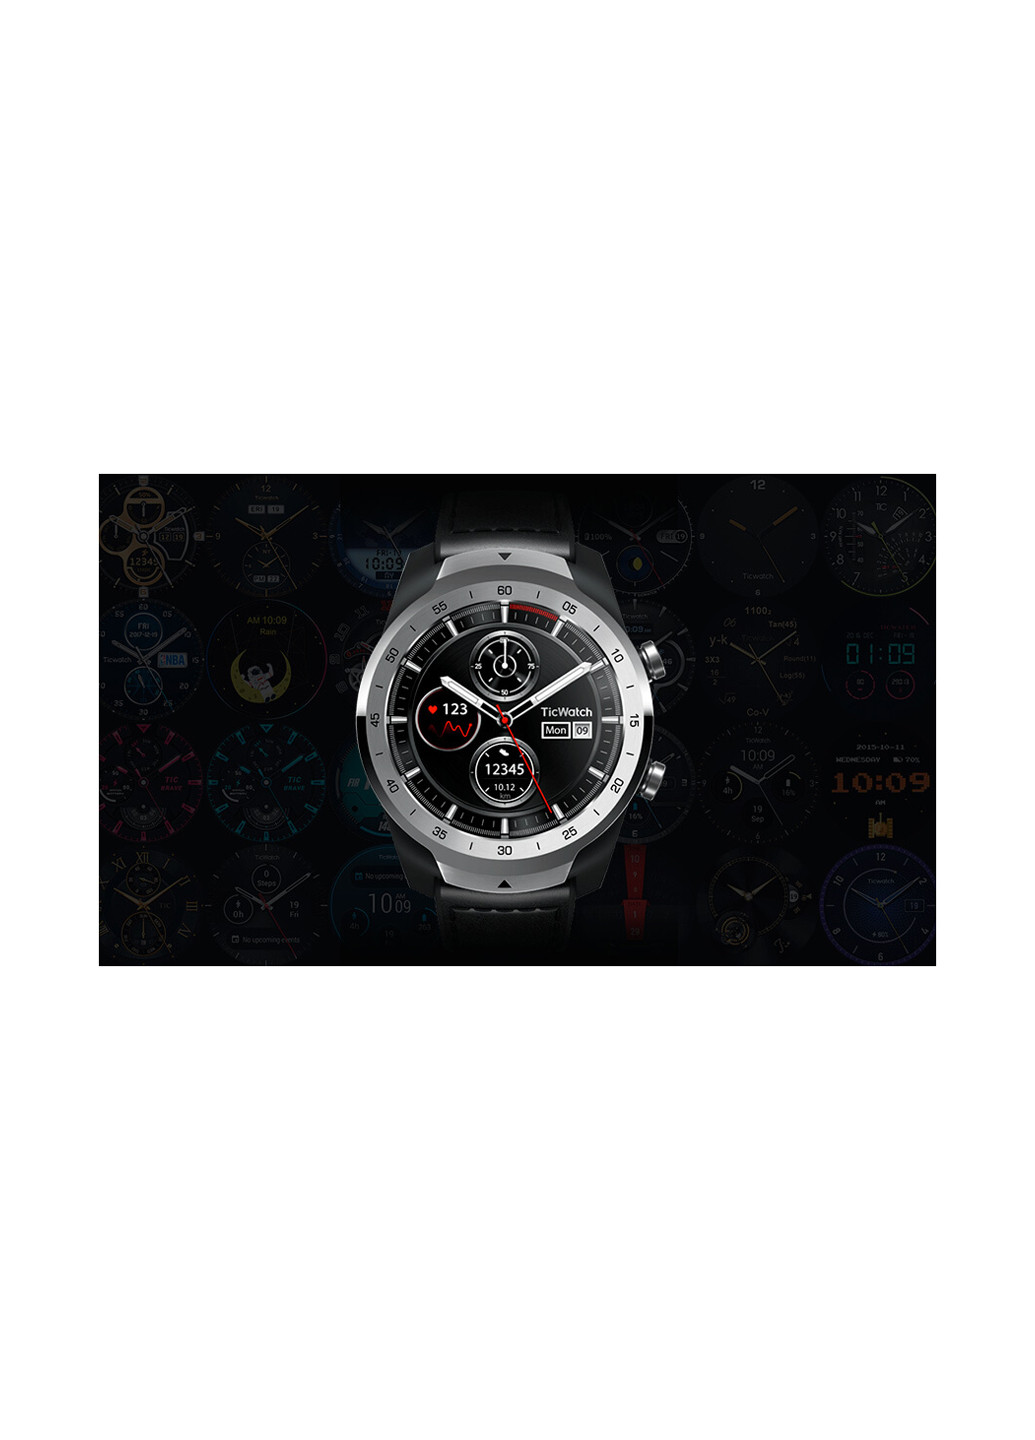 Смарт-часы MOBVOI ticwatch pro wf12106 shadow black (p1031000600a) (144071618)